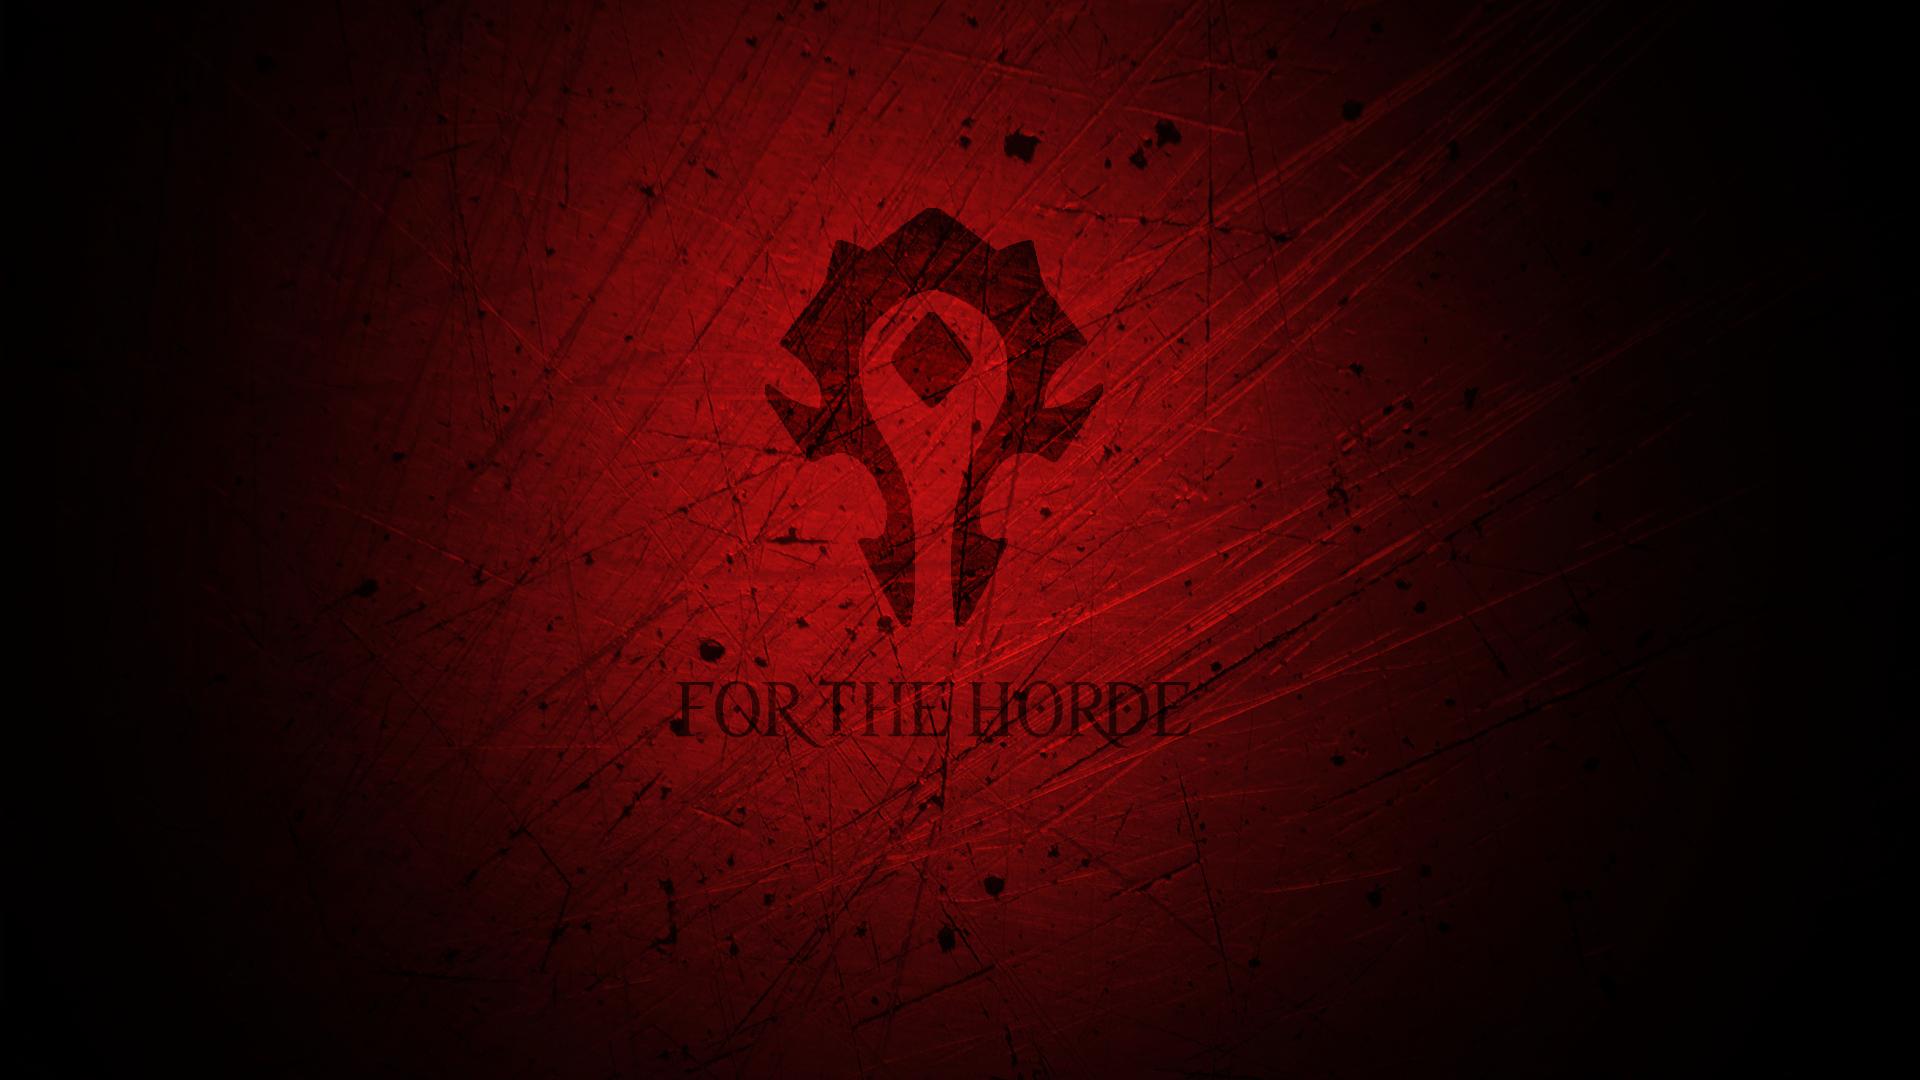 Horde Logo Wallpapers